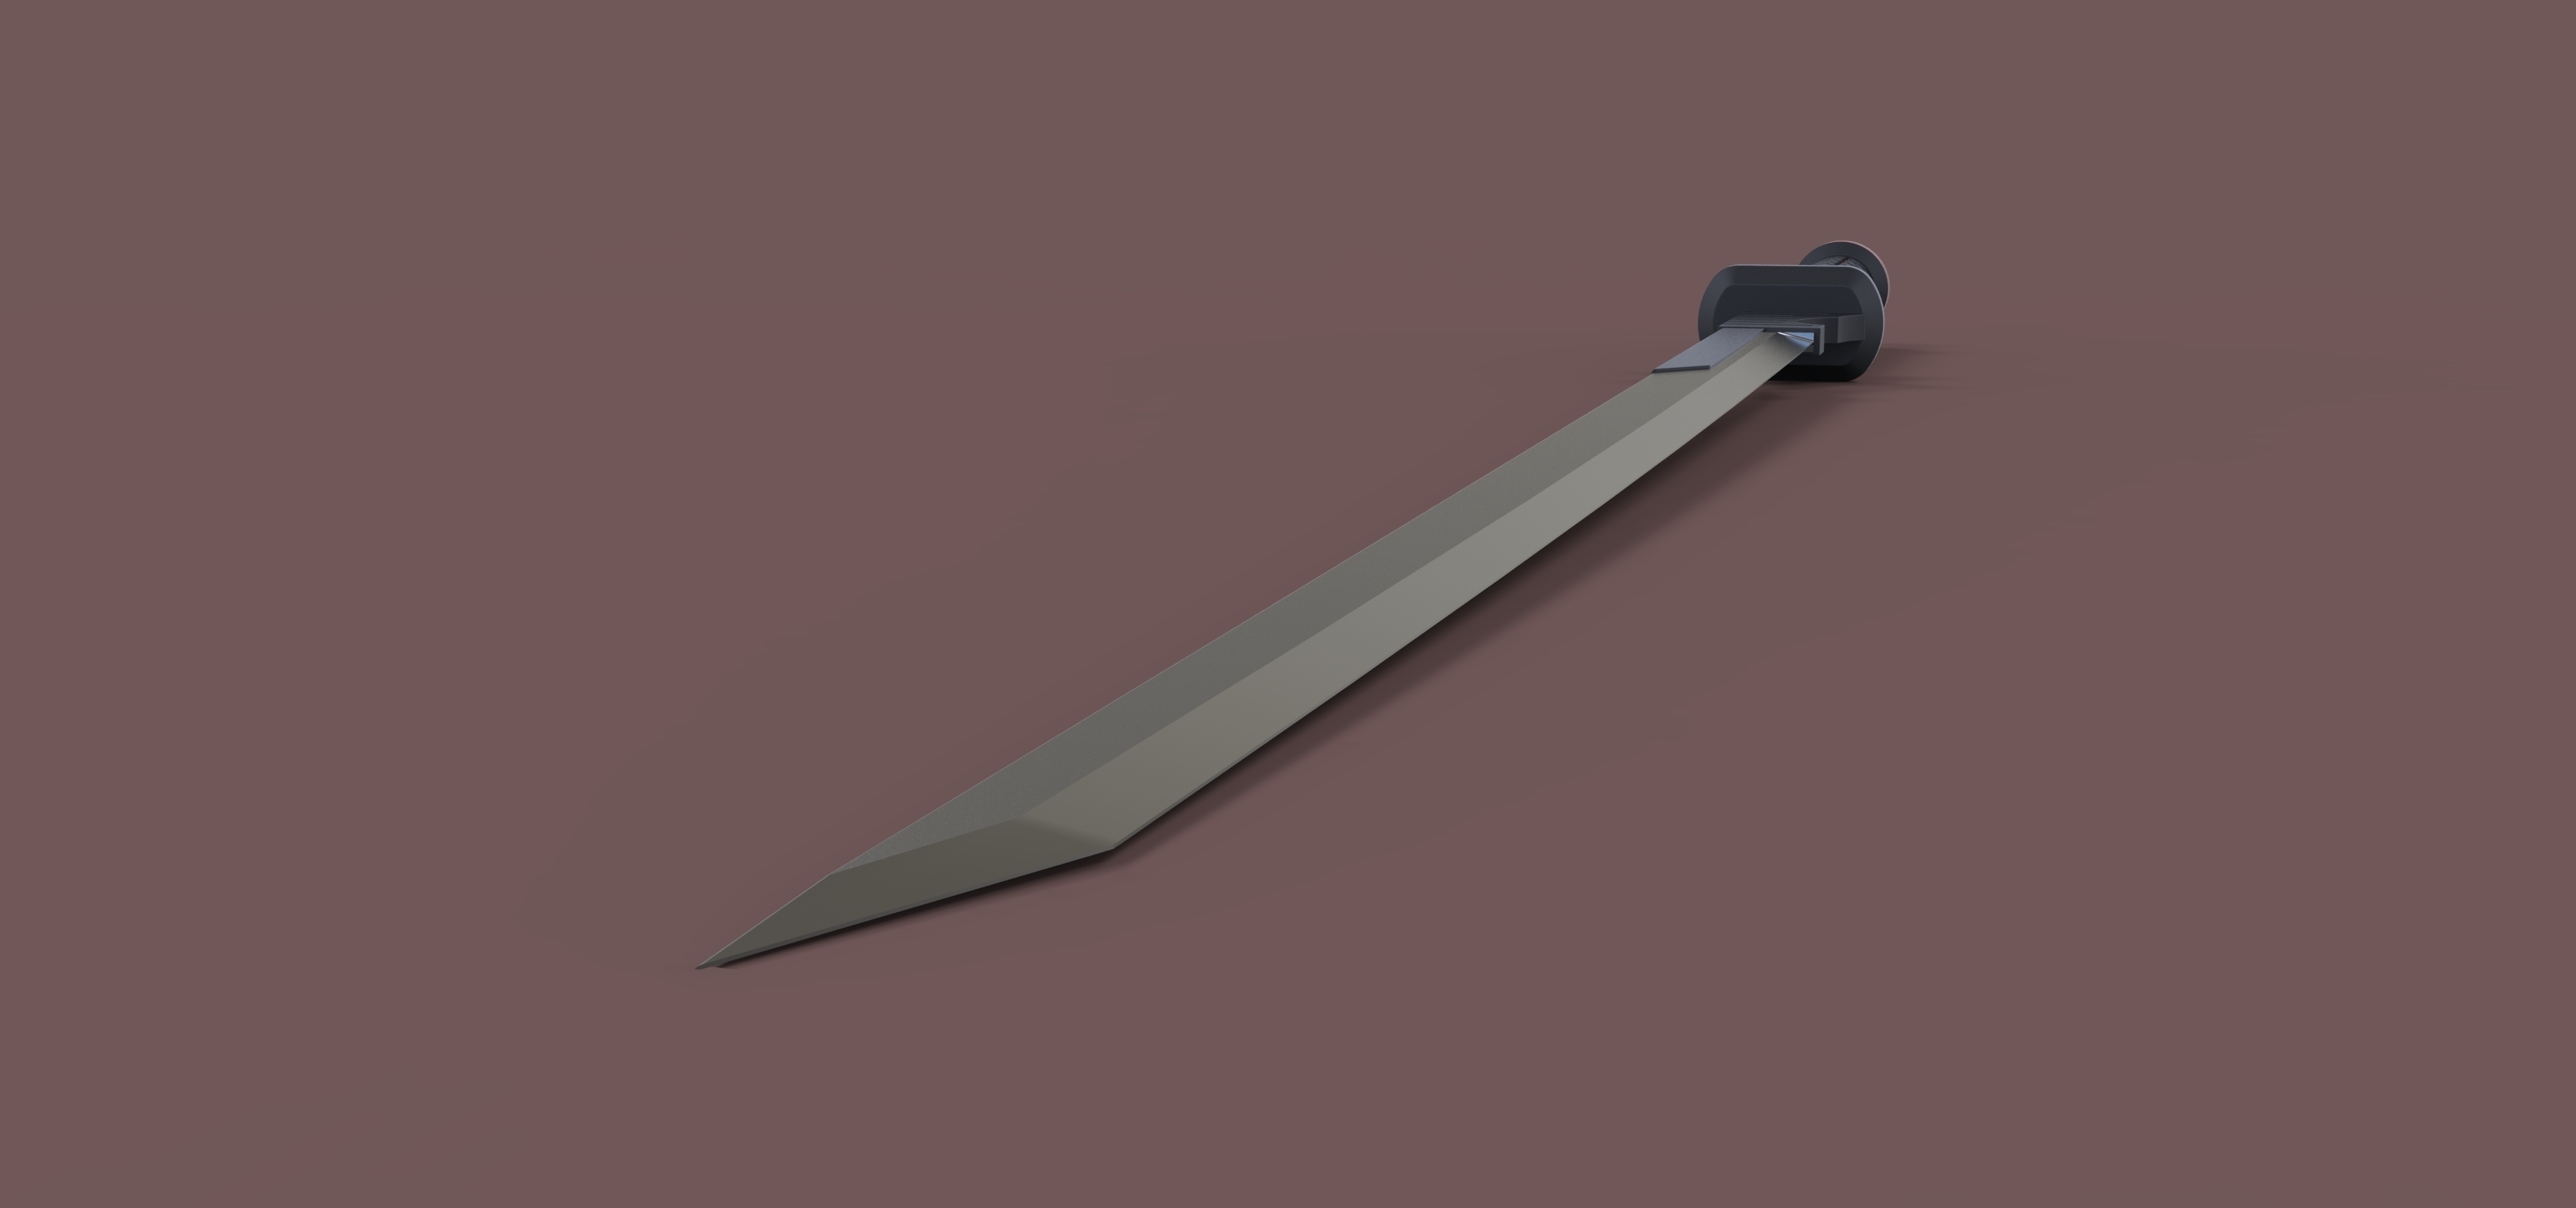 deathstroke sword replica